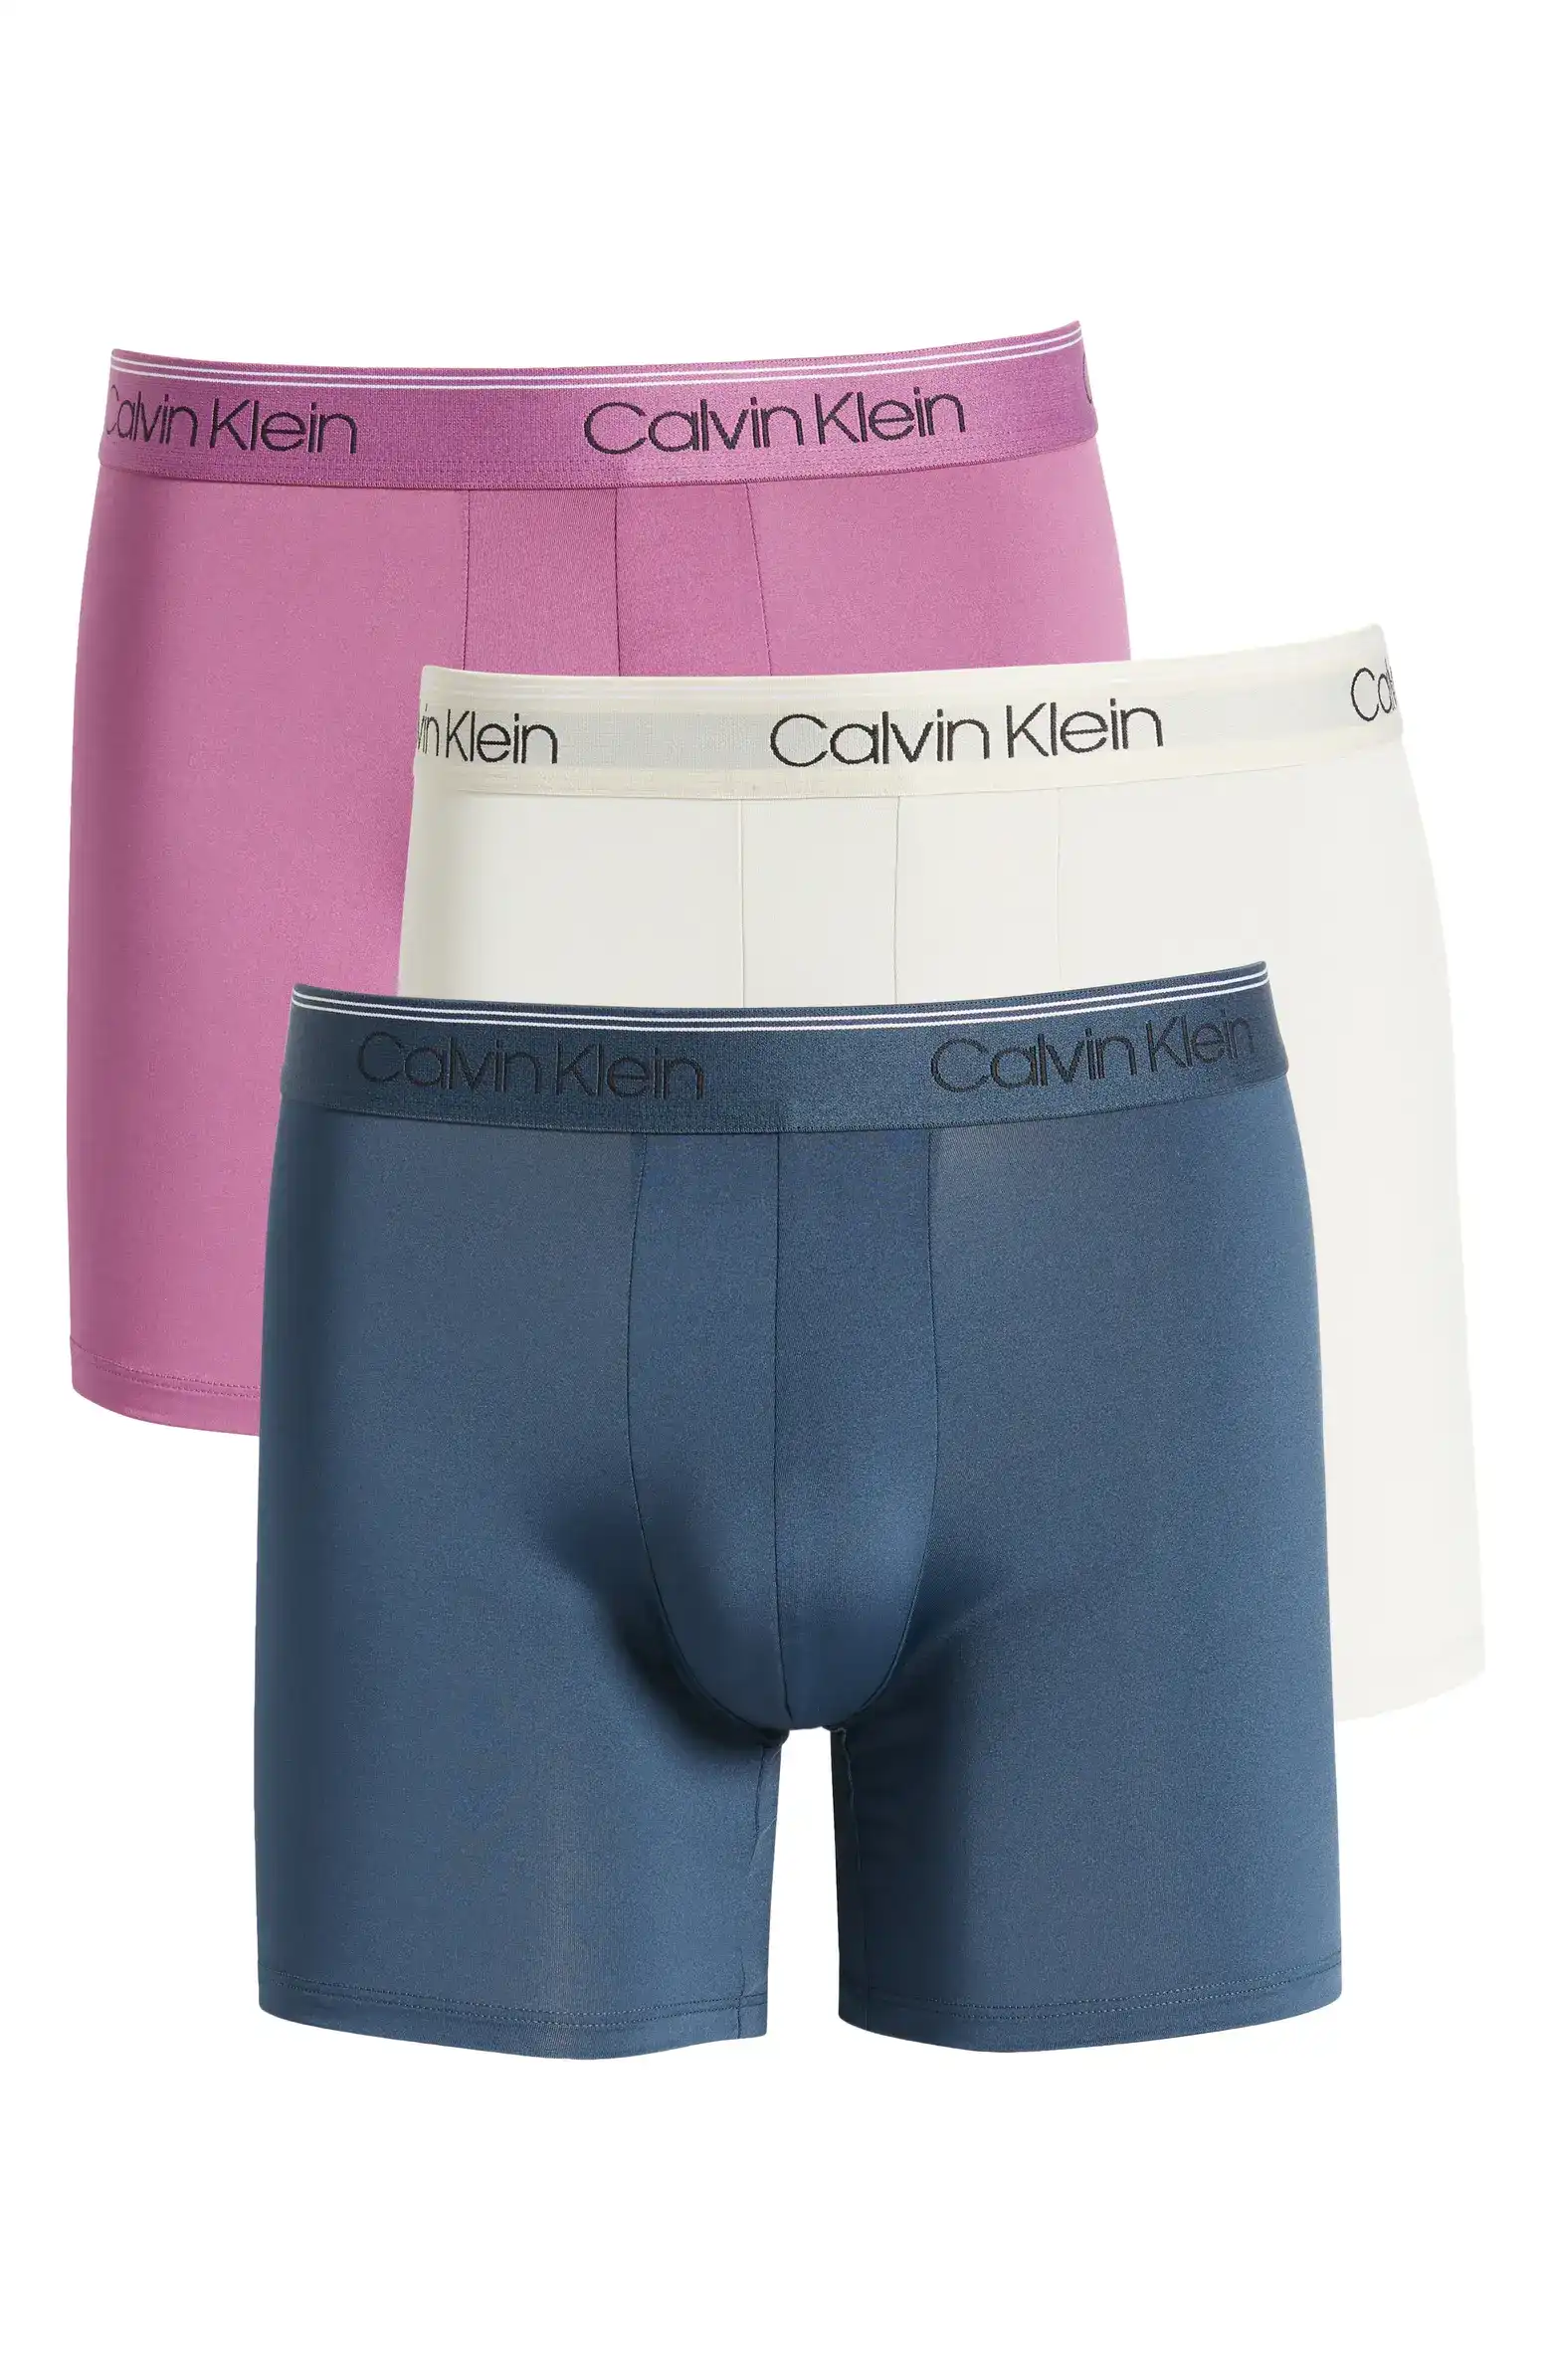 Calvin Klein 3-Pack Low Rise Microfiber Stretch Boxer Briefs